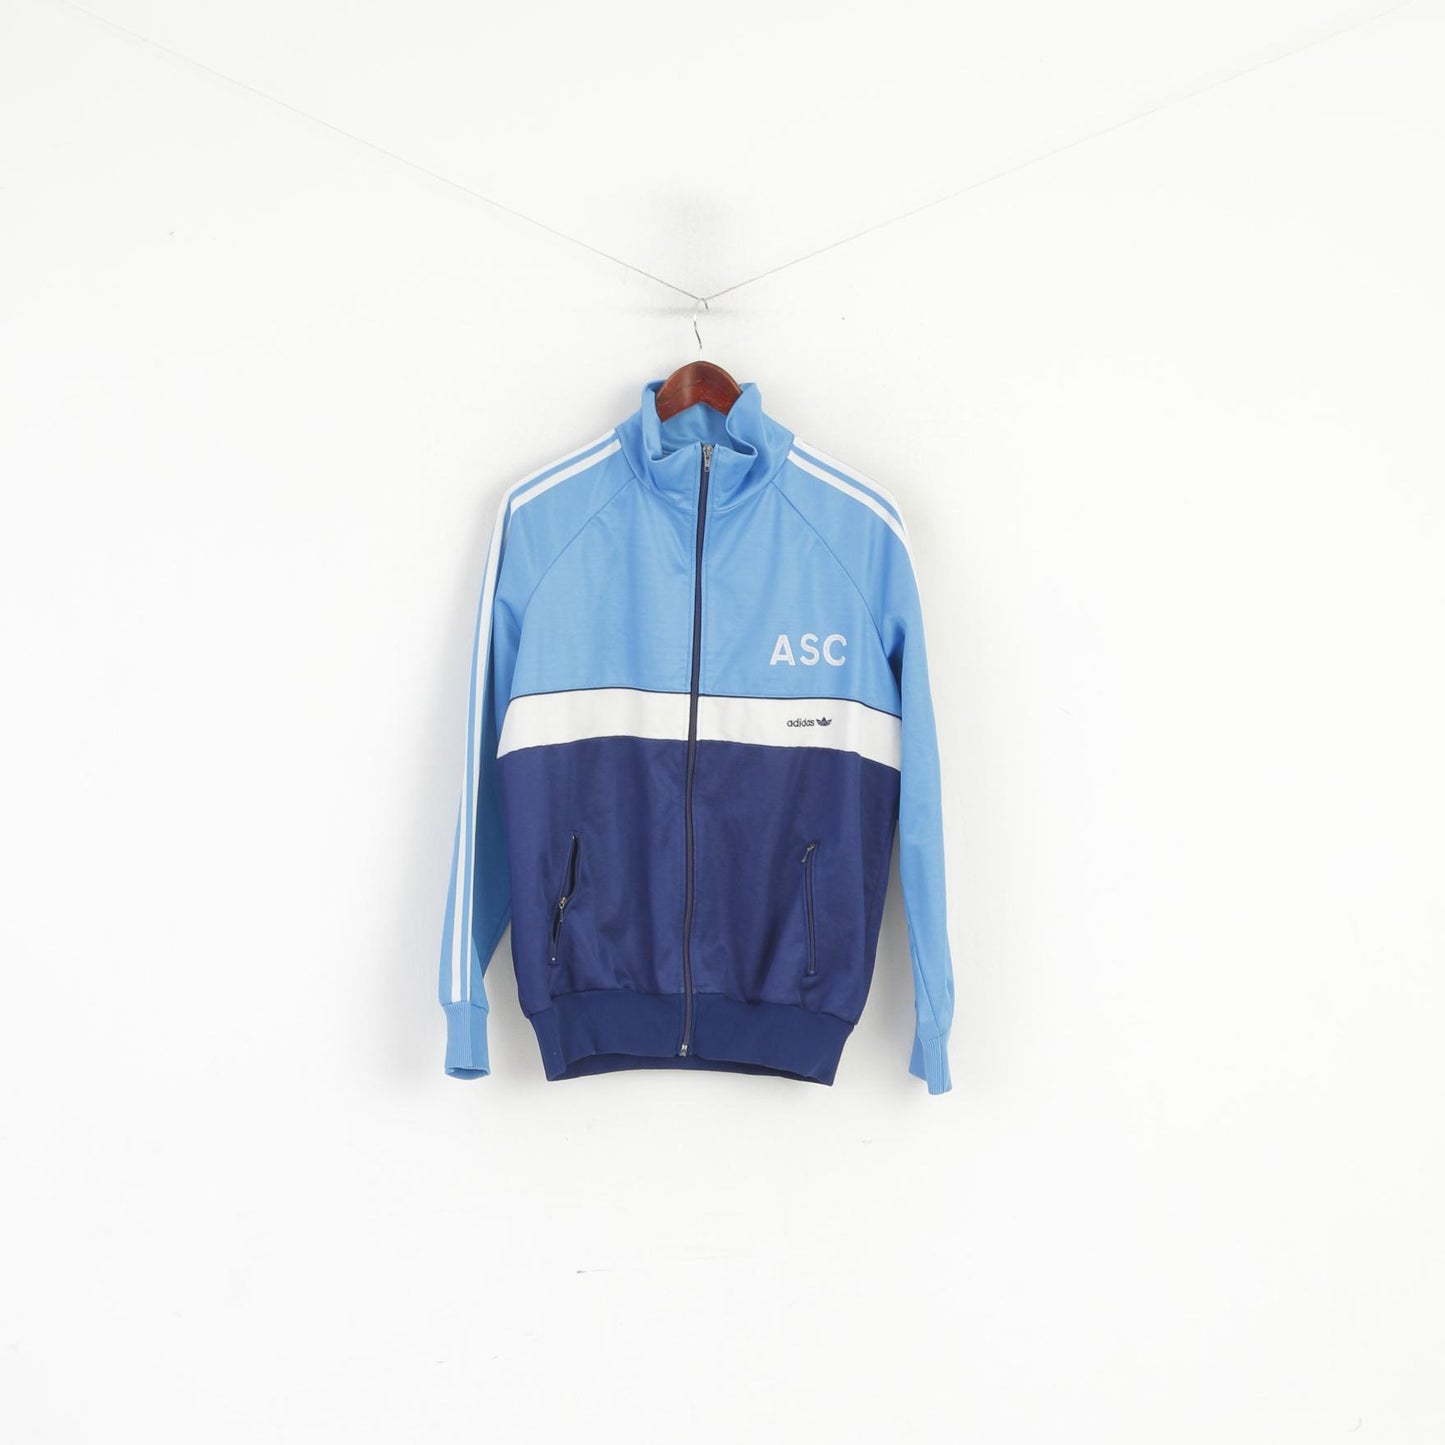 Adidas Men M Sweatshirt Blue Vintage West Germany ASC Sporthaus Retro Track Top